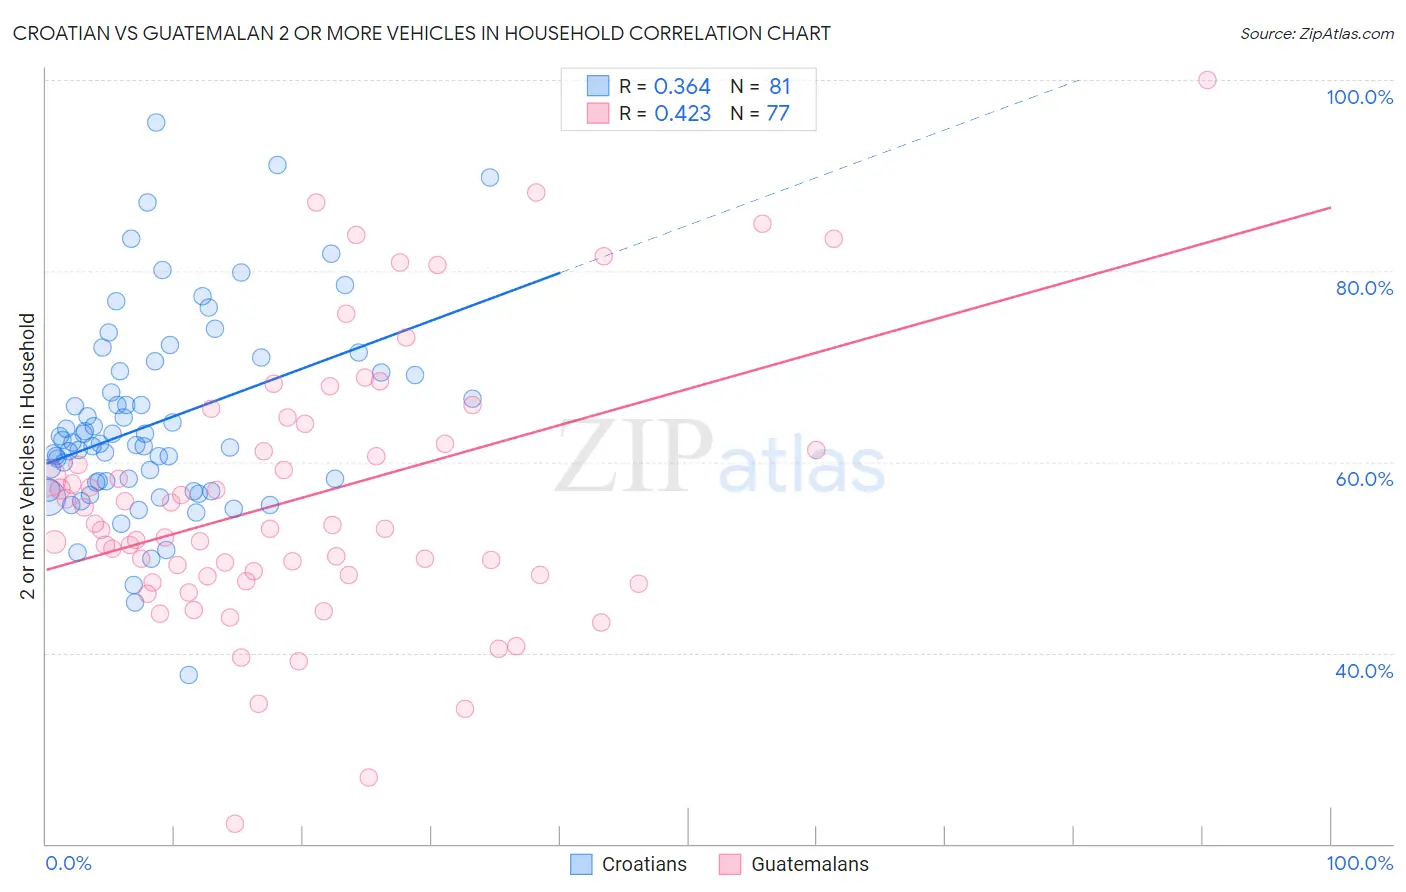 Croatian vs Guatemalan 2 or more Vehicles in Household